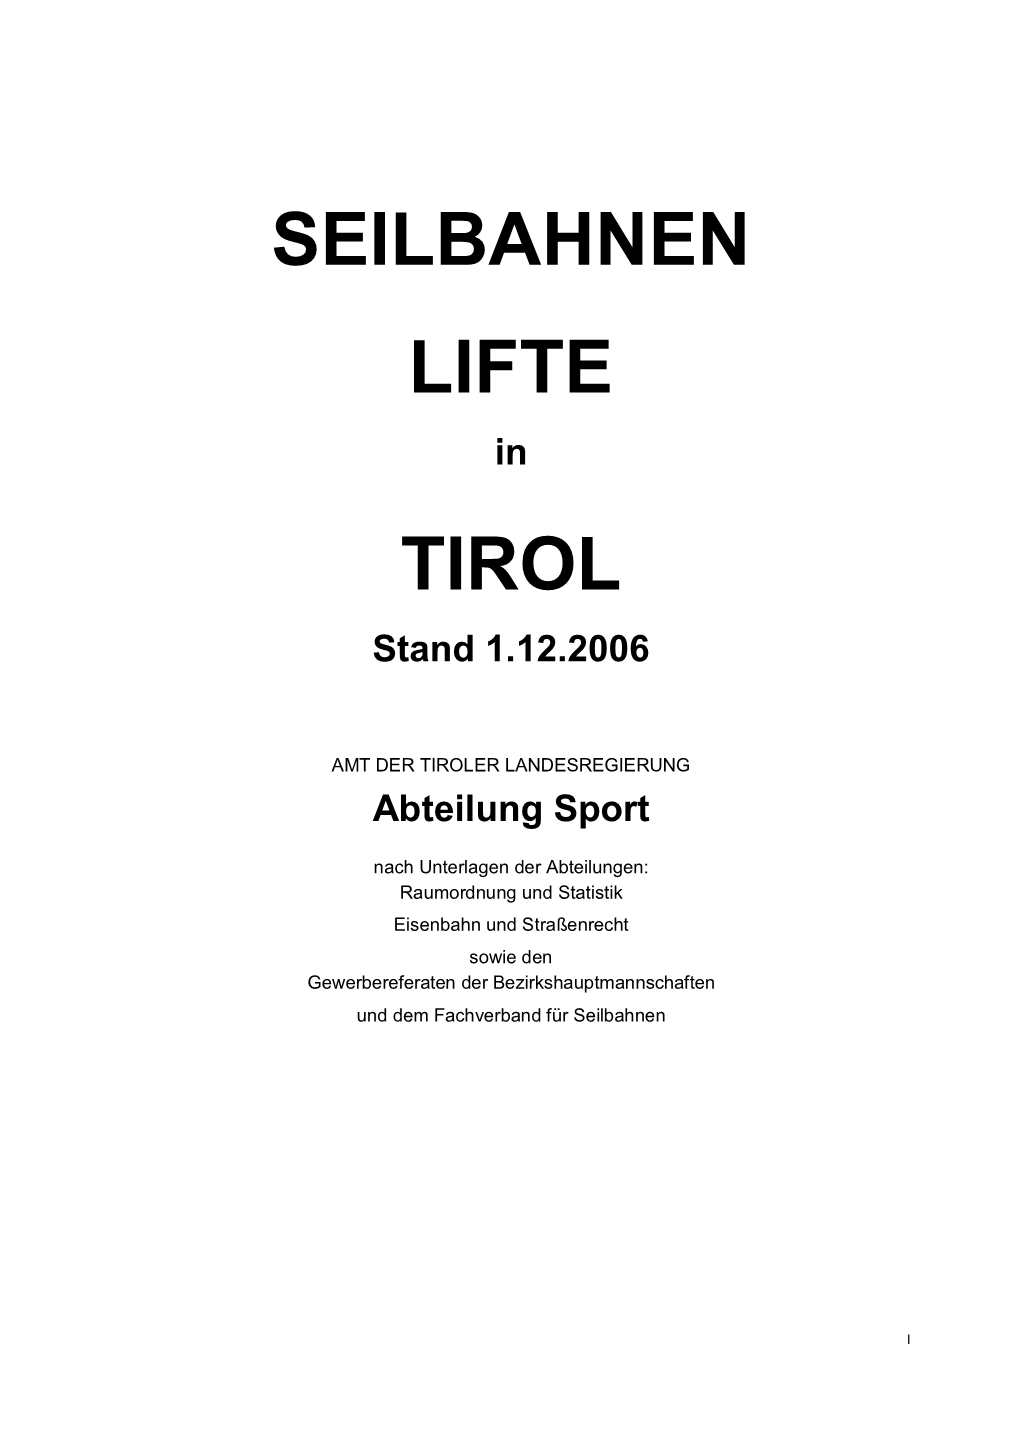 SEILBAHNEN LIFTE in TIROL Stand 1.12.2006